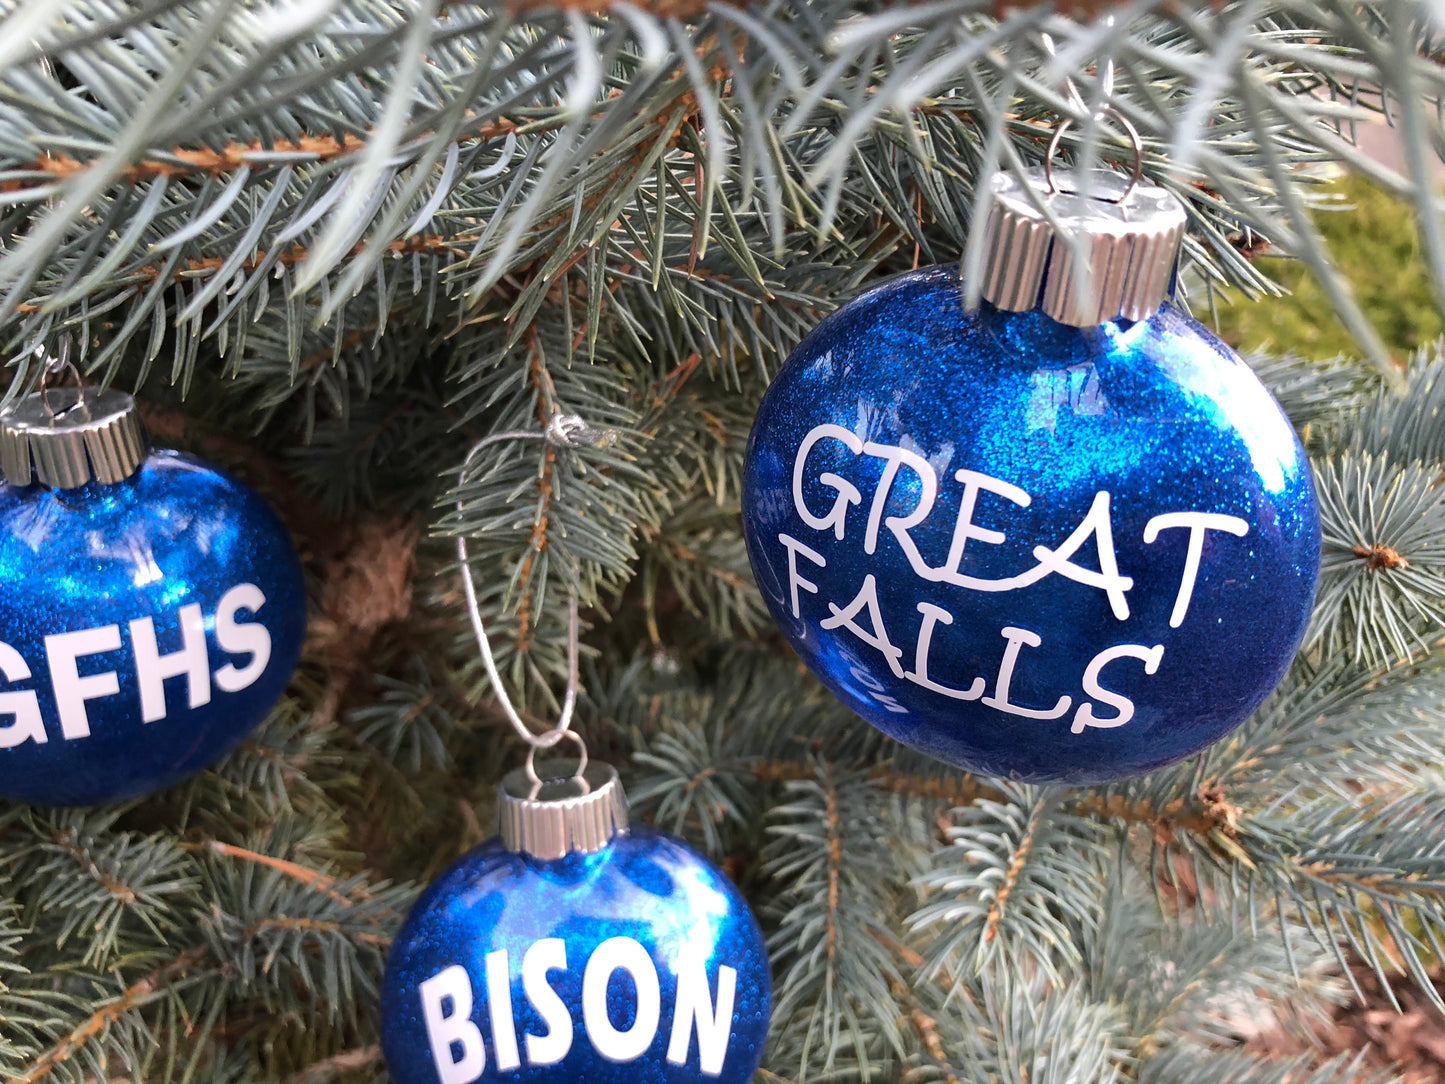 GFHS Great Falls High School Bison ornament set